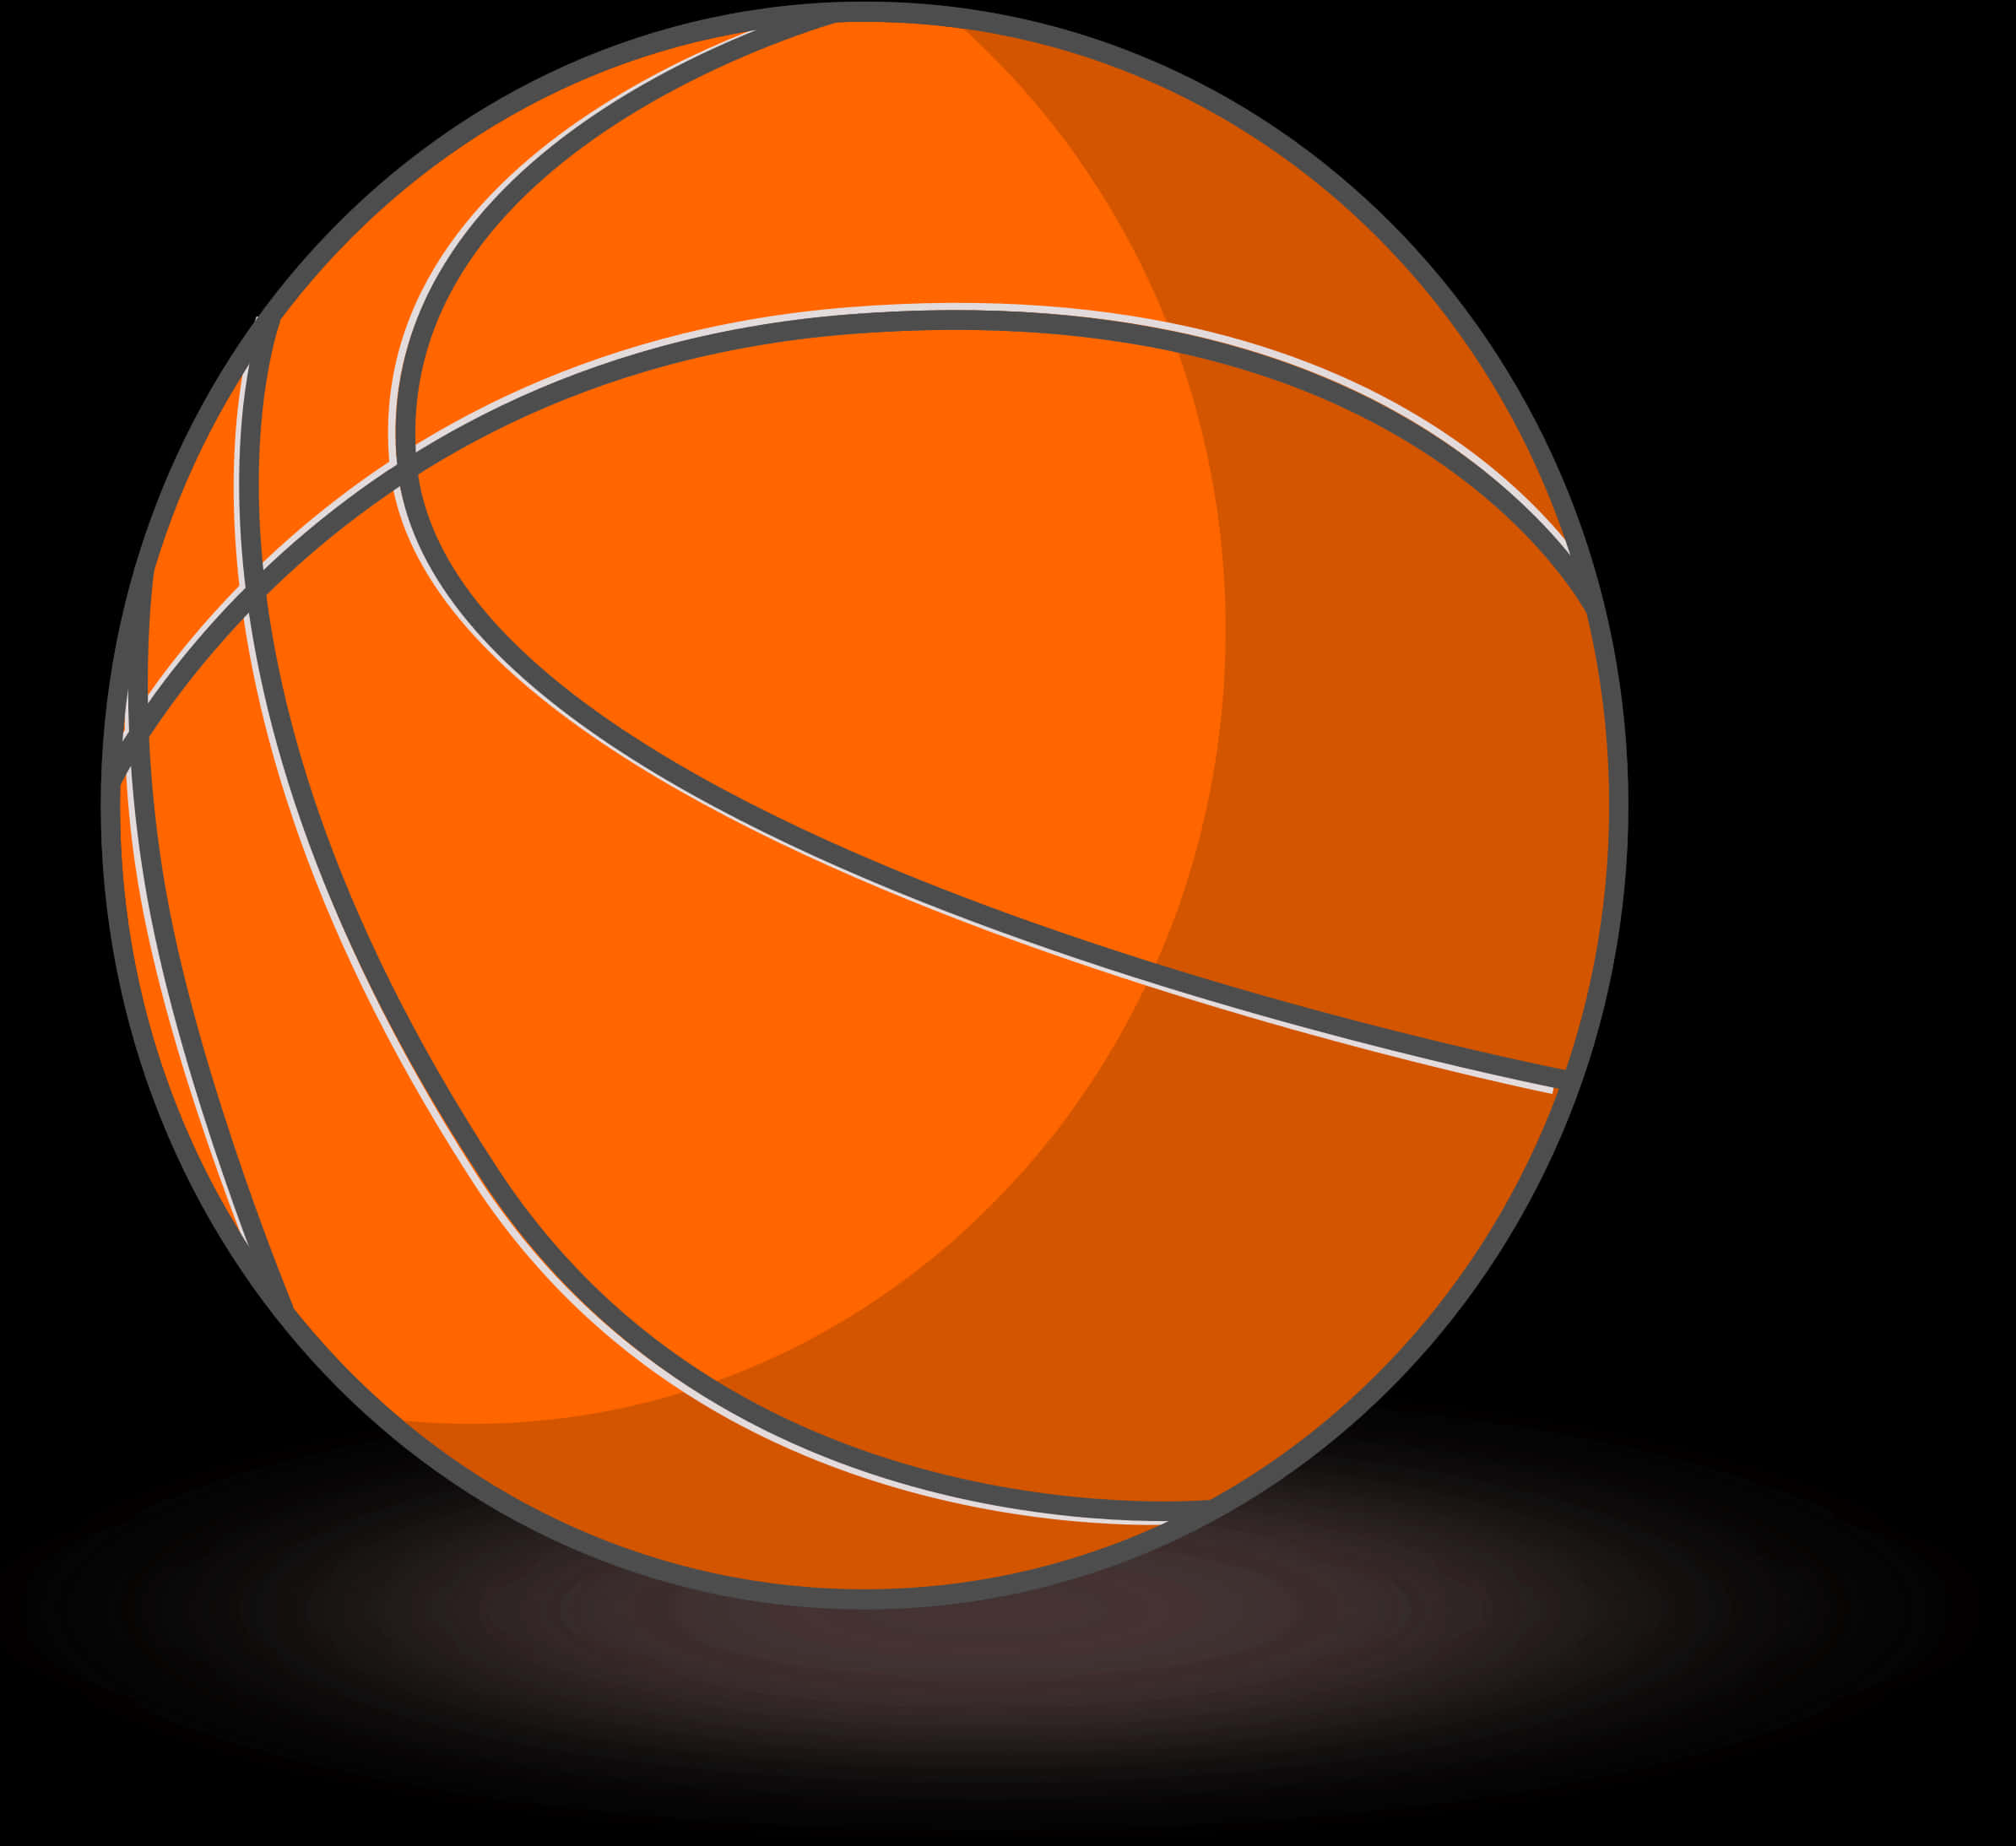 A Close Up Of A Basketball